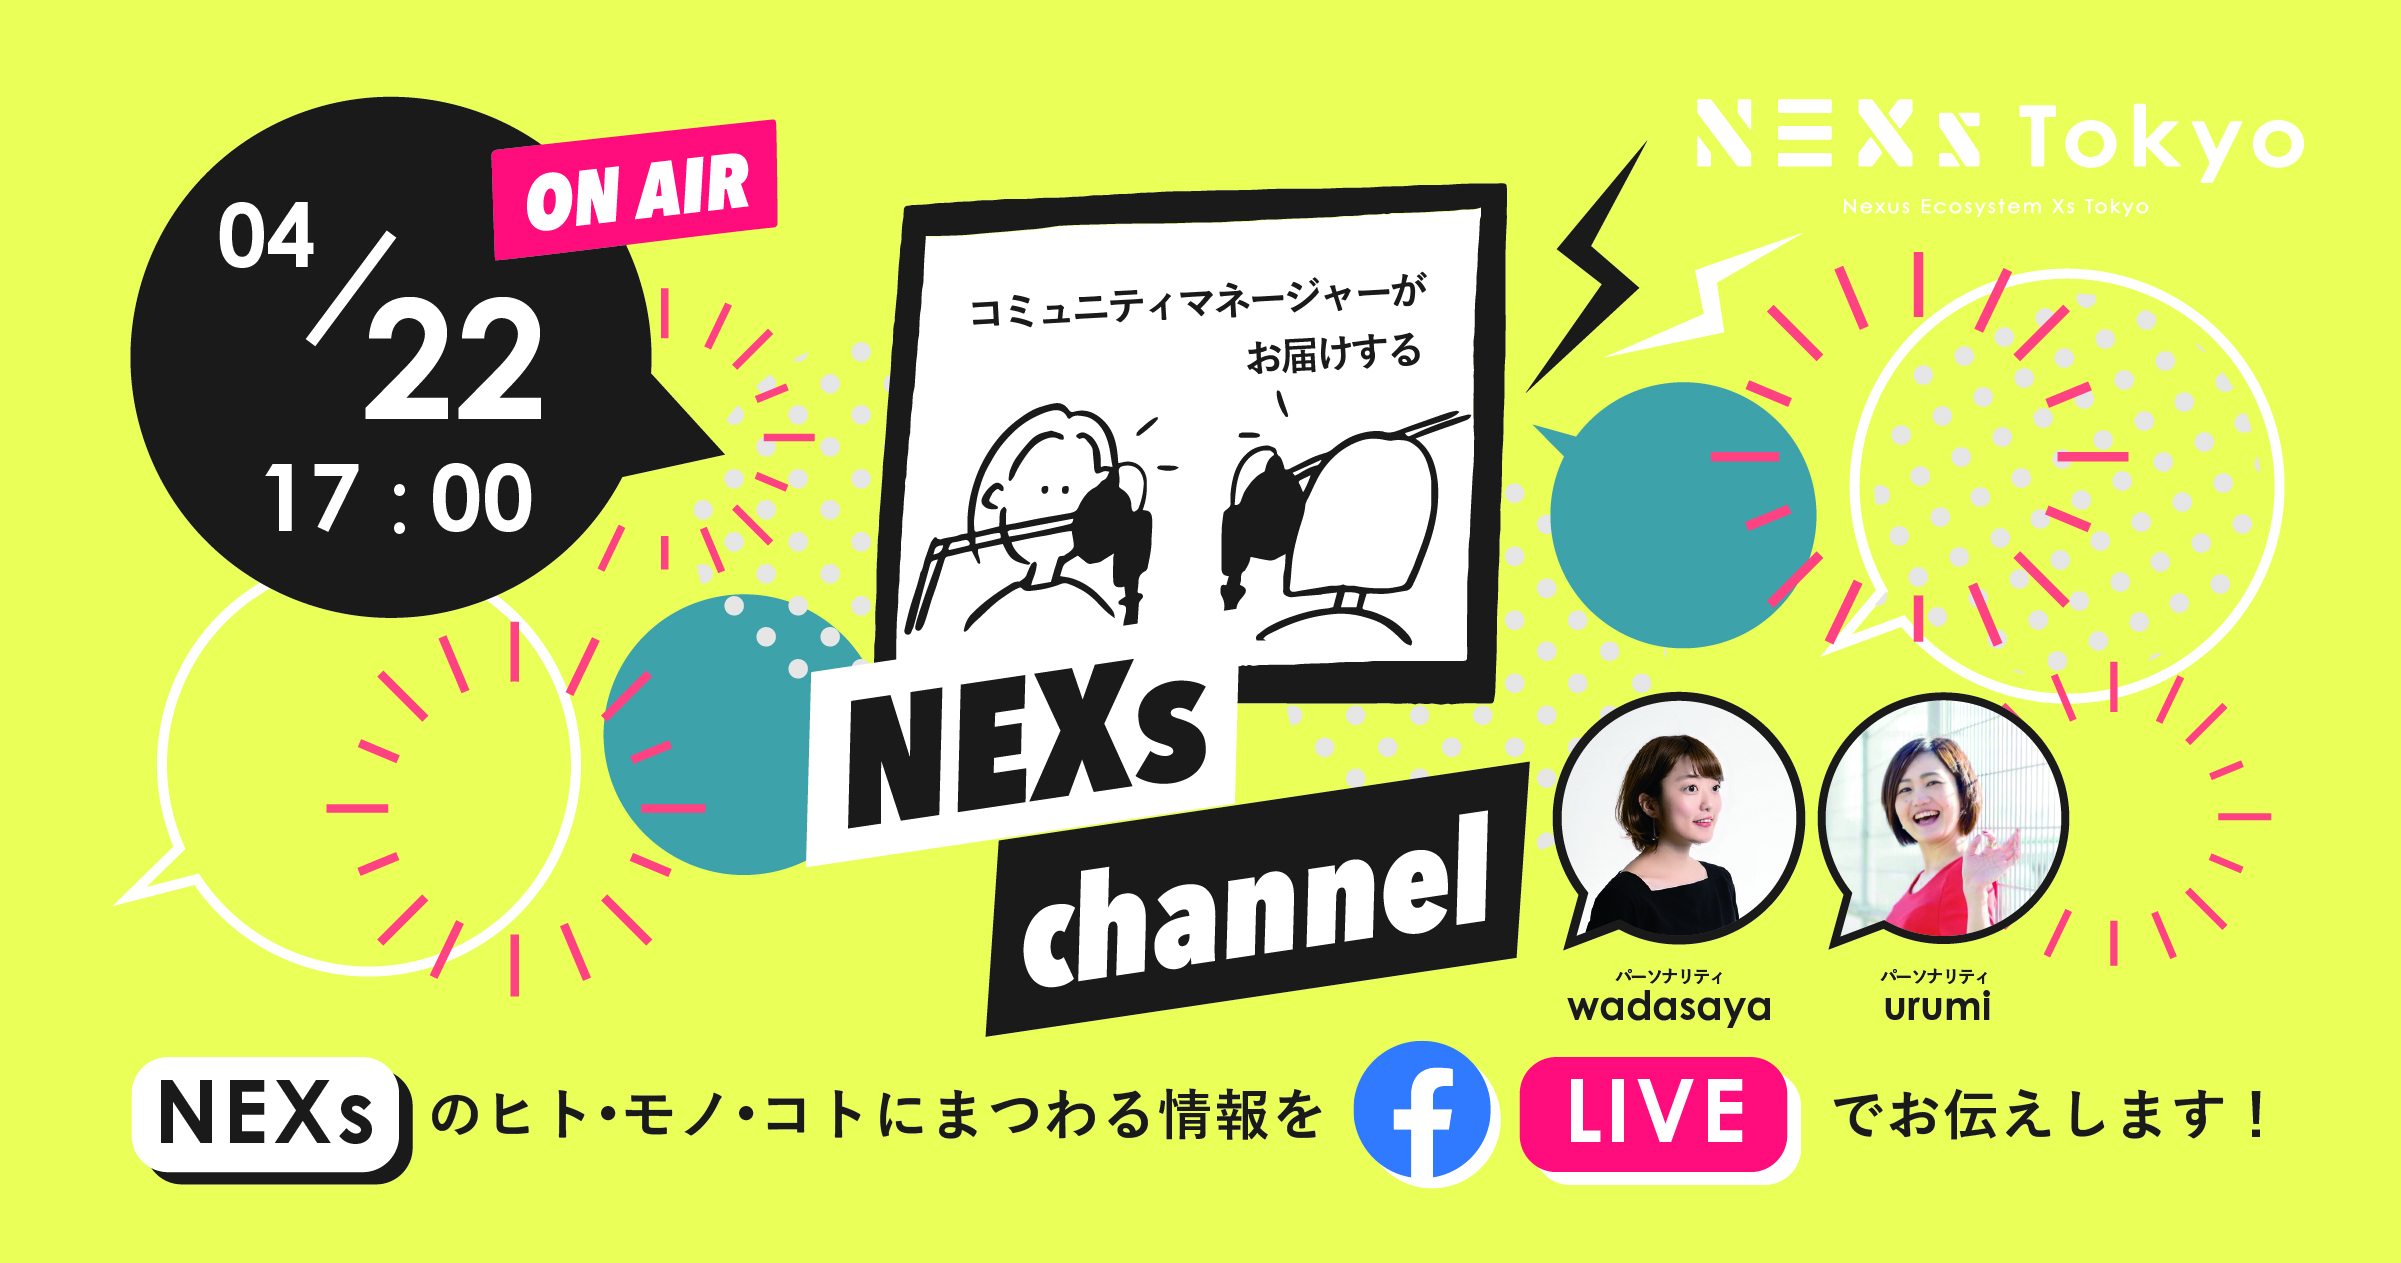 NEXs channel #4-NEXsTokyoのヒト・モノ・コトを特設ラジオブースから生放送でお届け！-